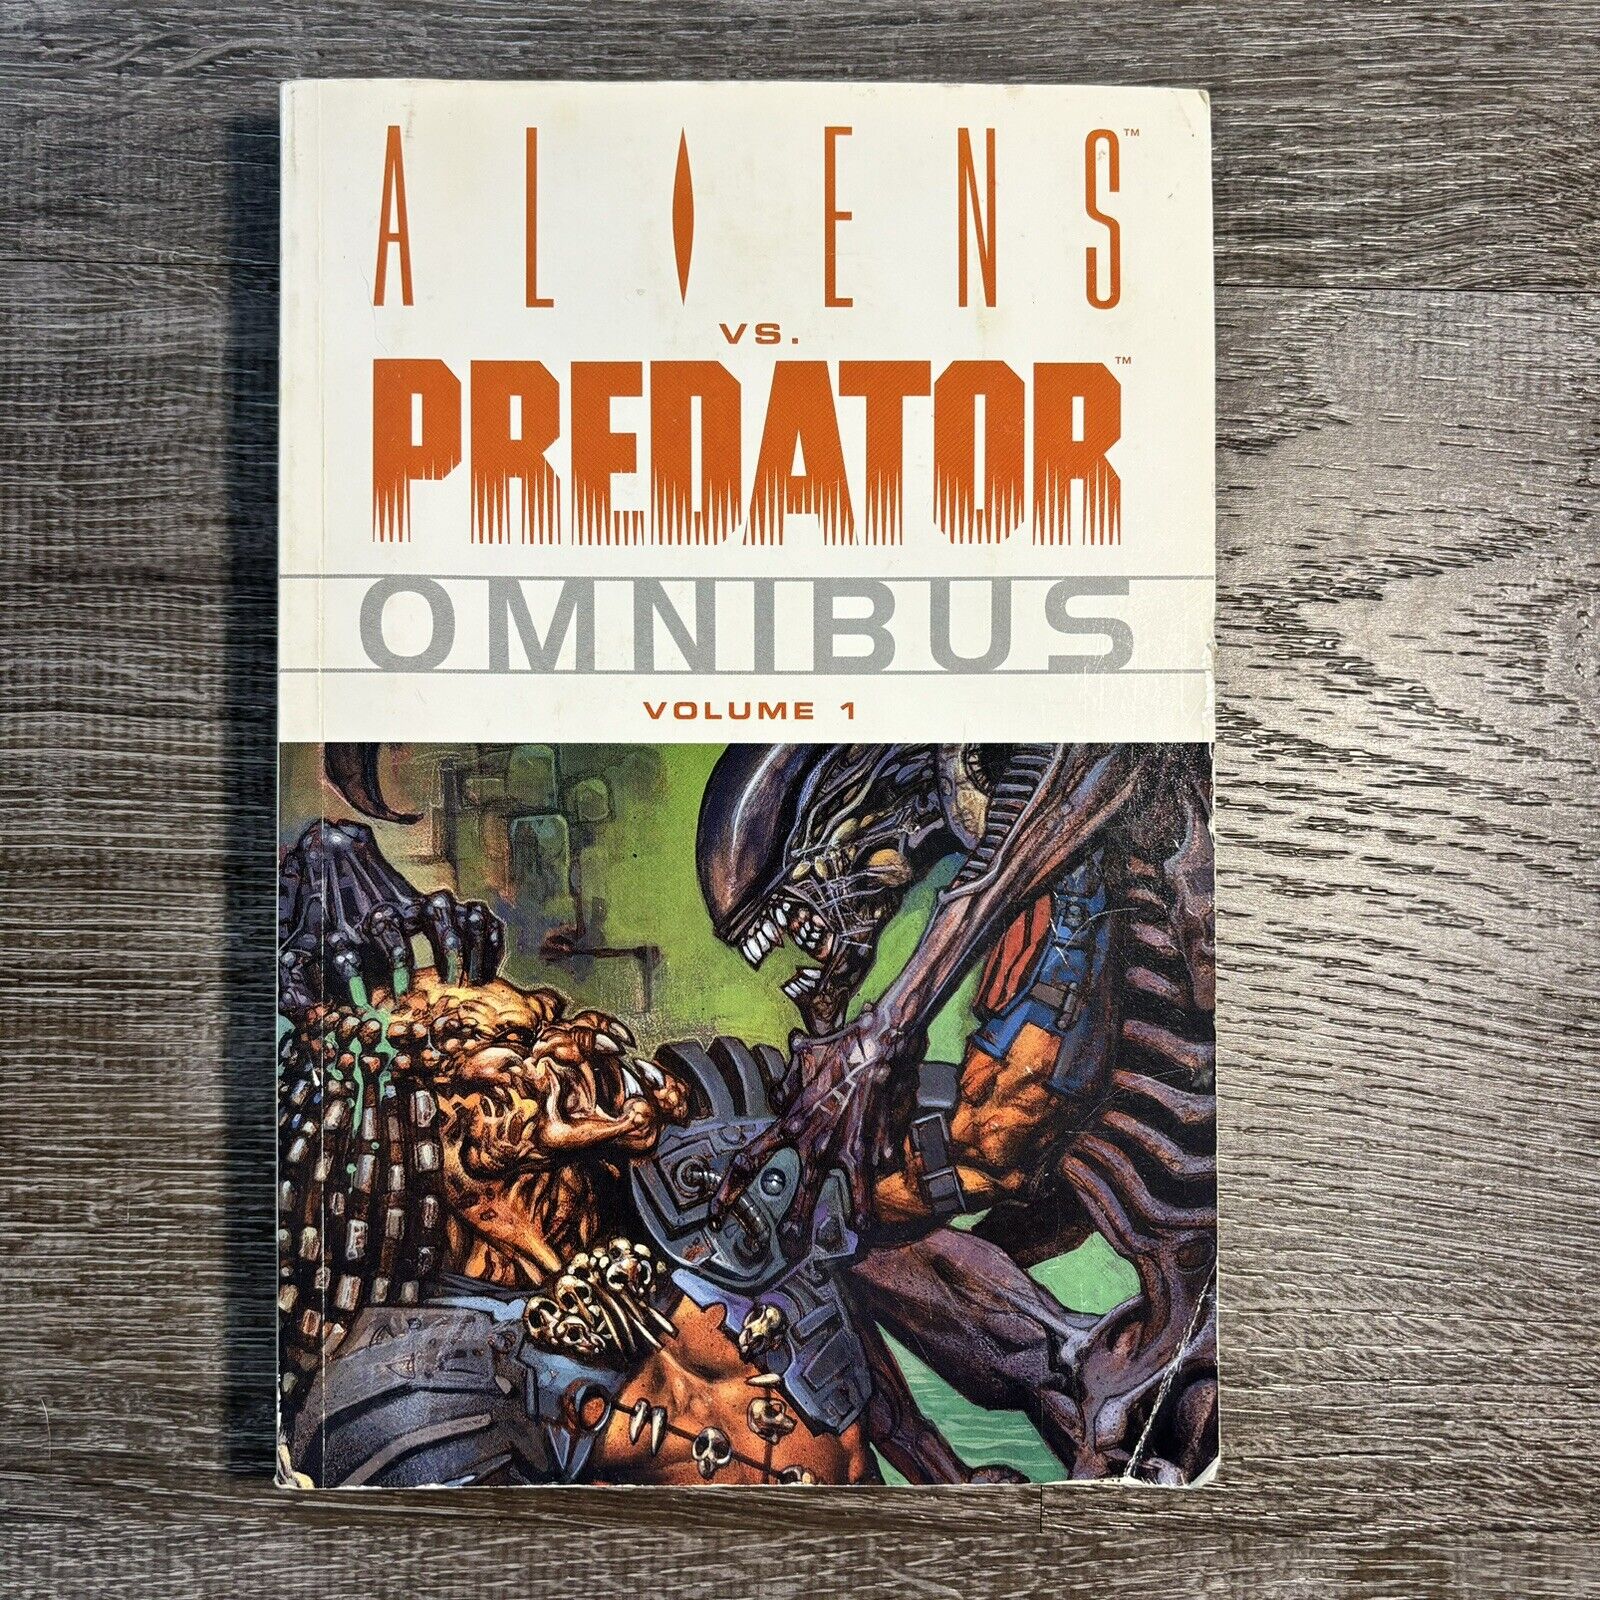 Aliens vs. Predator: Omnibus Vol. 1 (2007) Dark Horse Paperback Graphic Novel